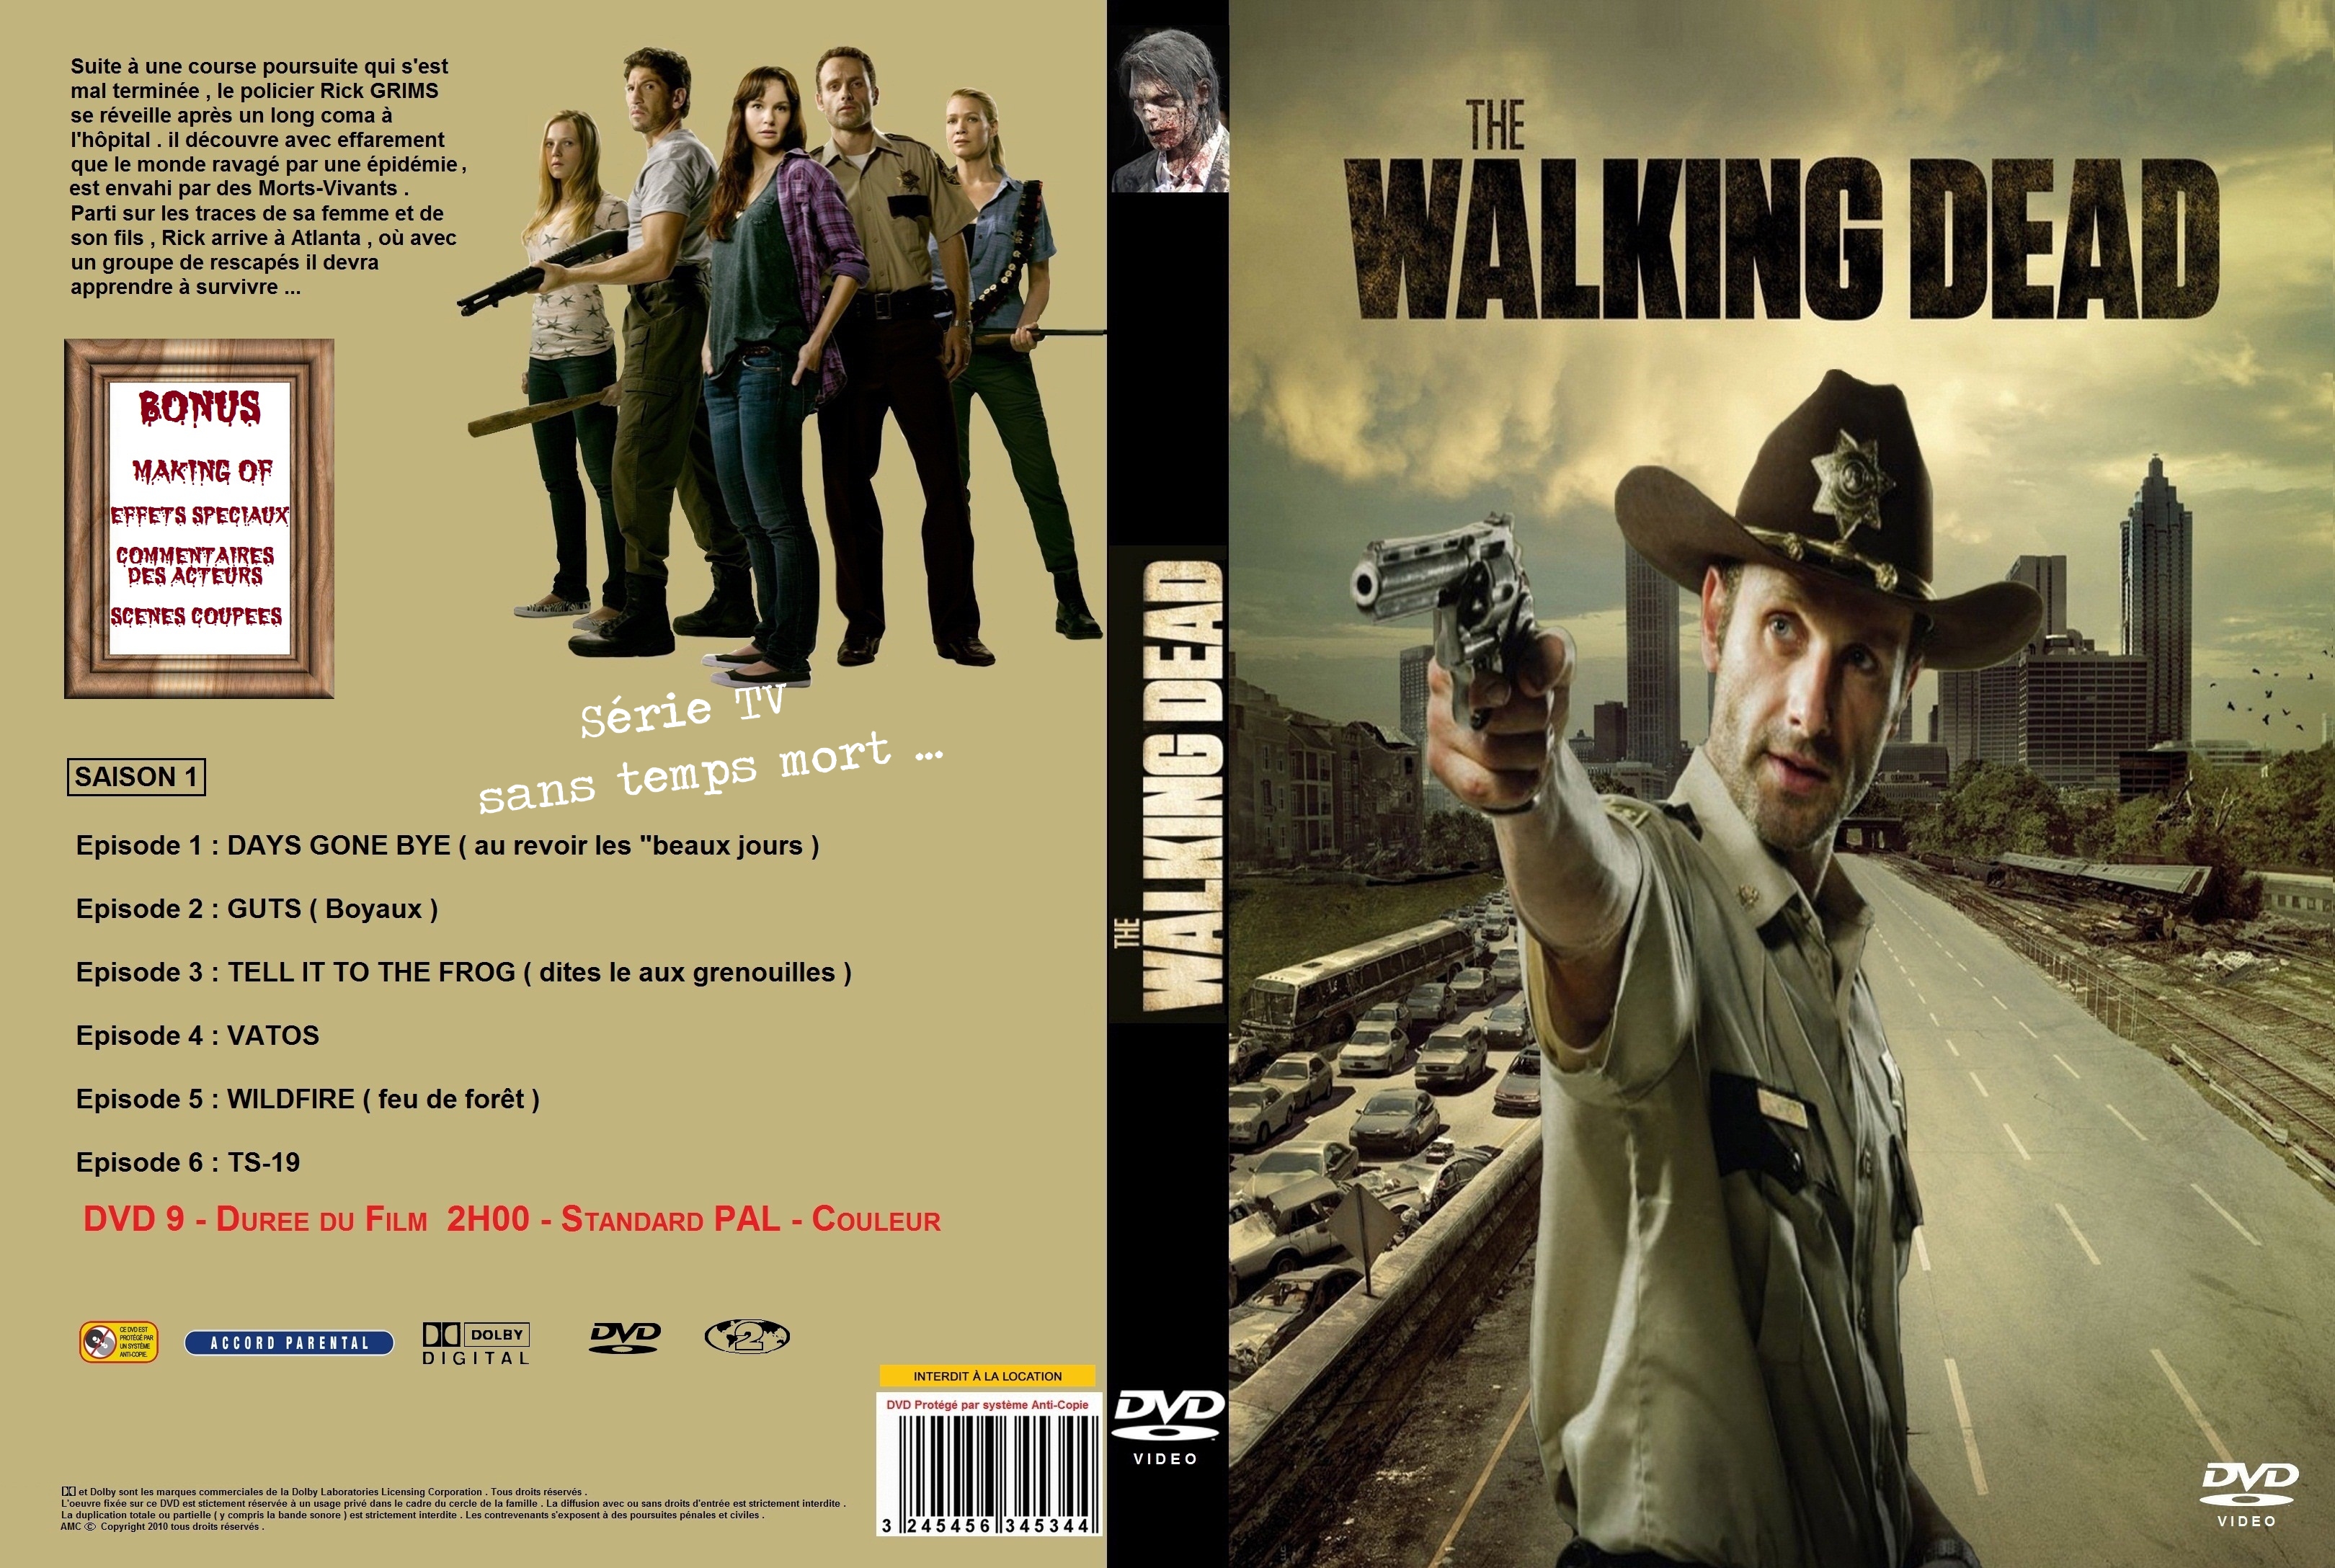 Jaquette DVD The Walking Dead Saison 1 custom